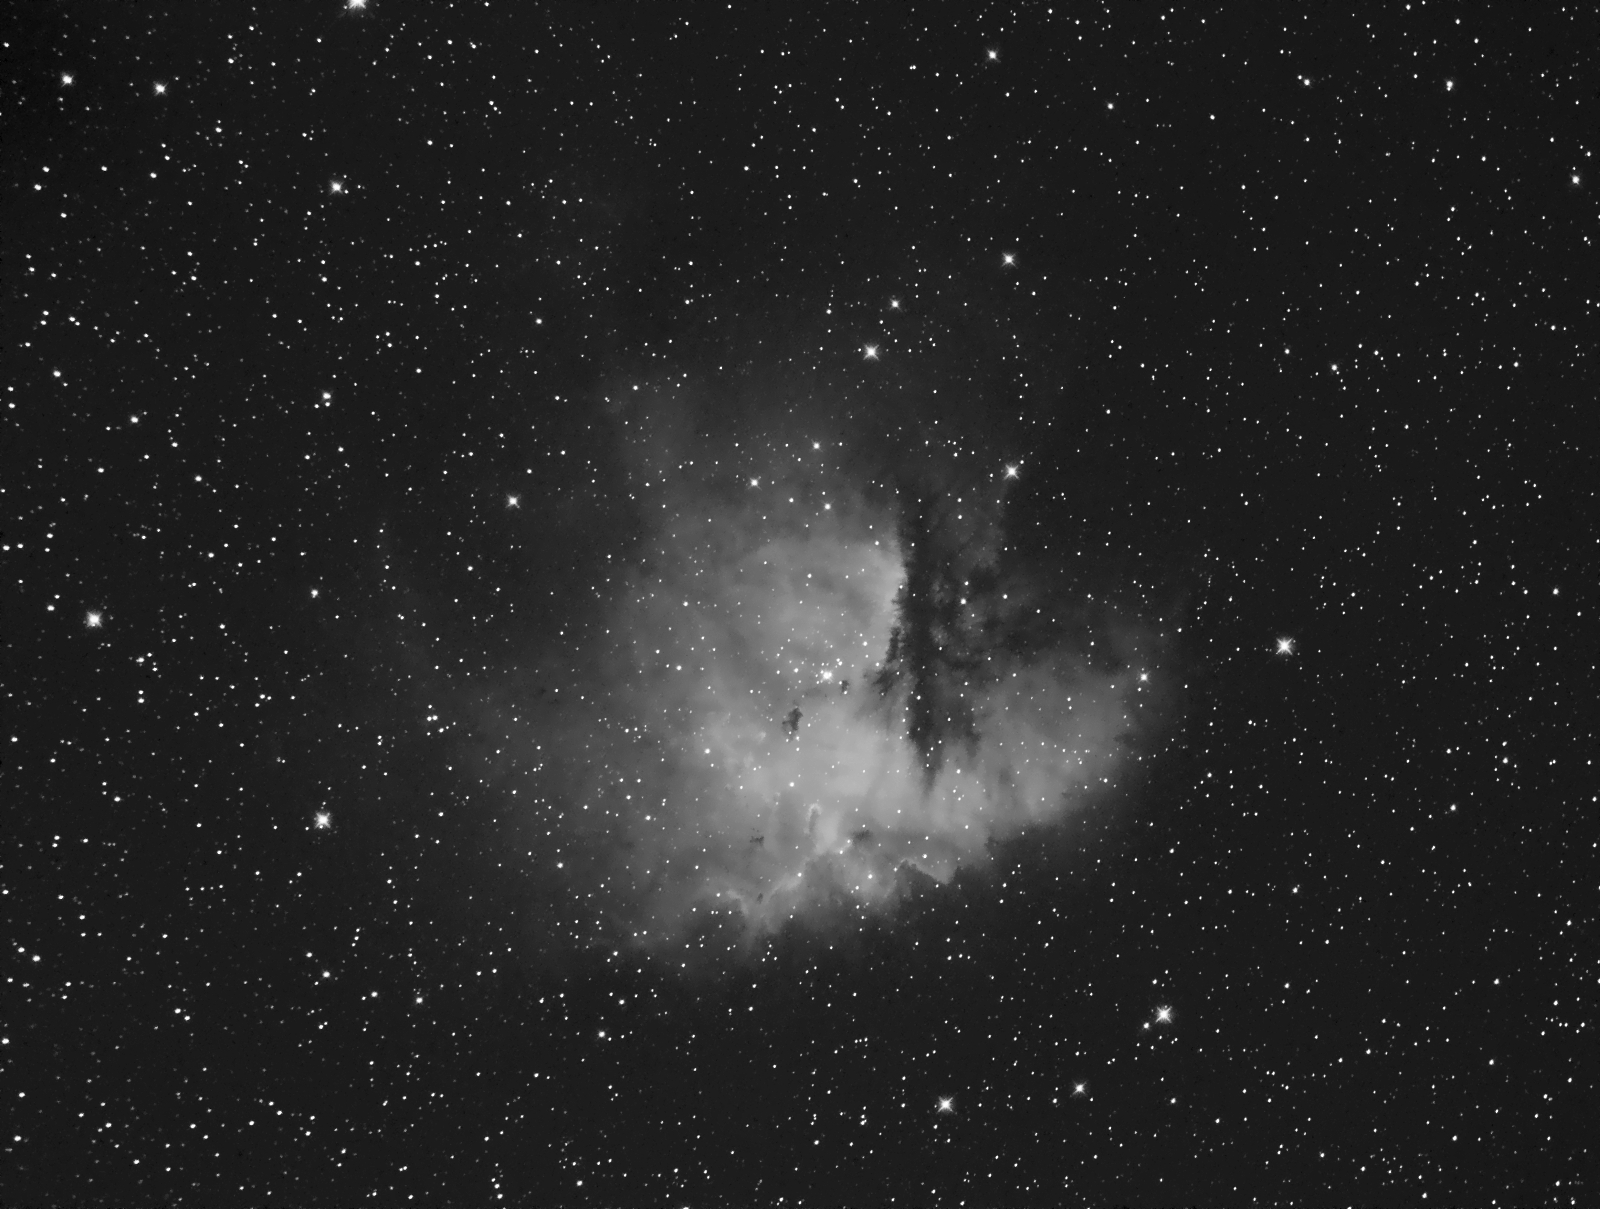 NGC281_MT160F4_Paracorr_ST8300M_600s_6shot_1600p.jpg